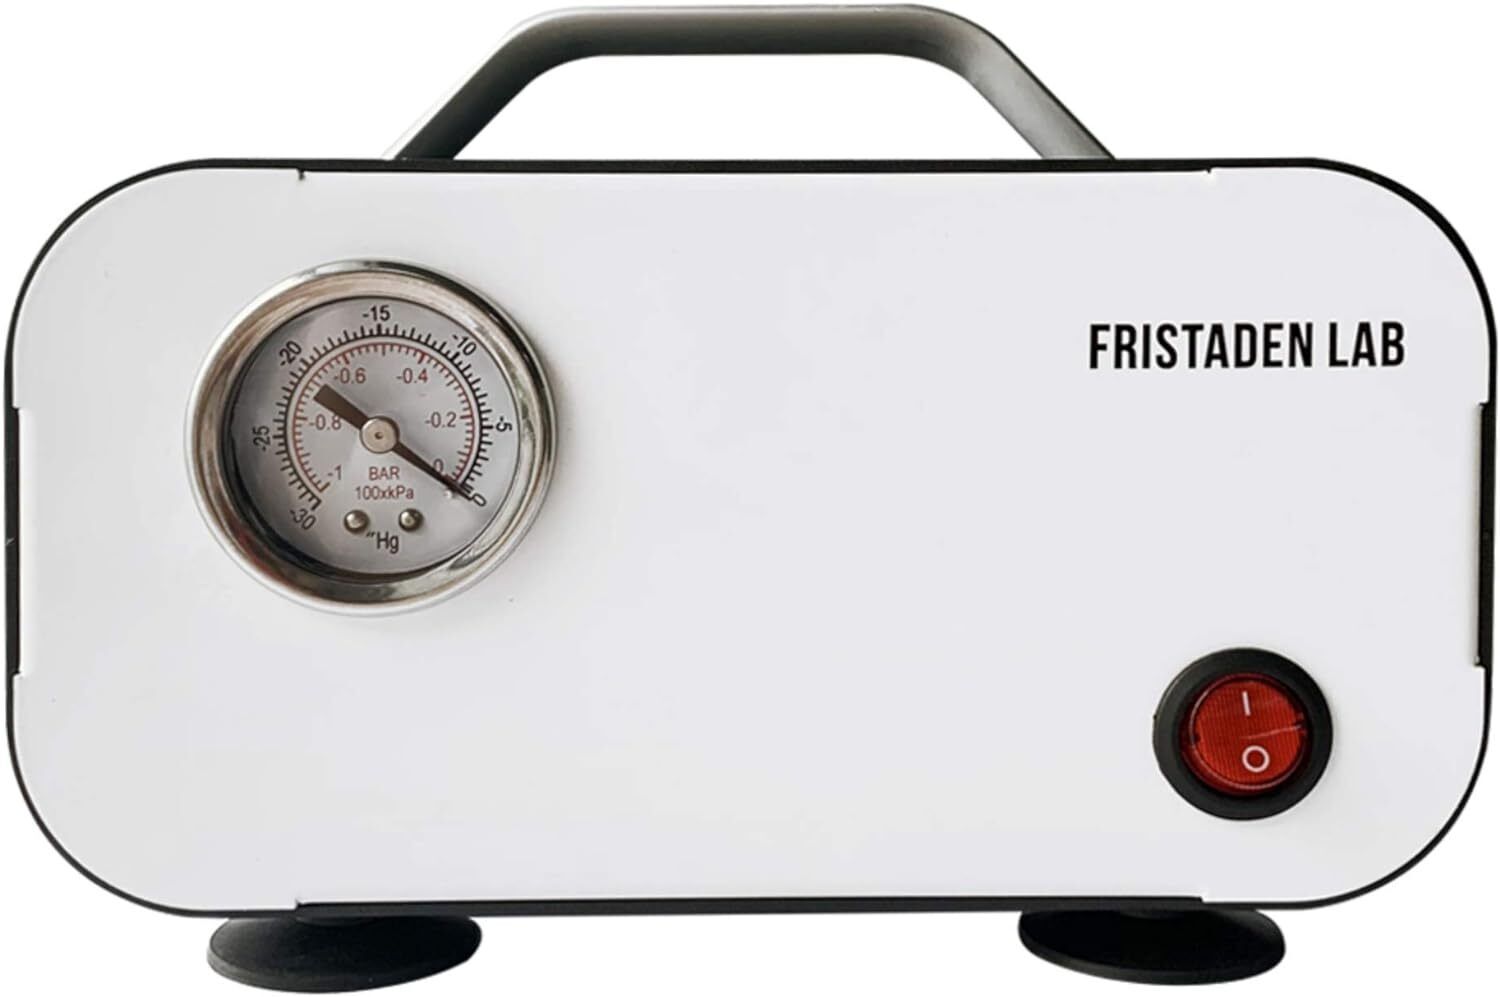 Fristaden Lab Portable American Oilless Vacuum Pump, 10L/Minute Pumping Speed